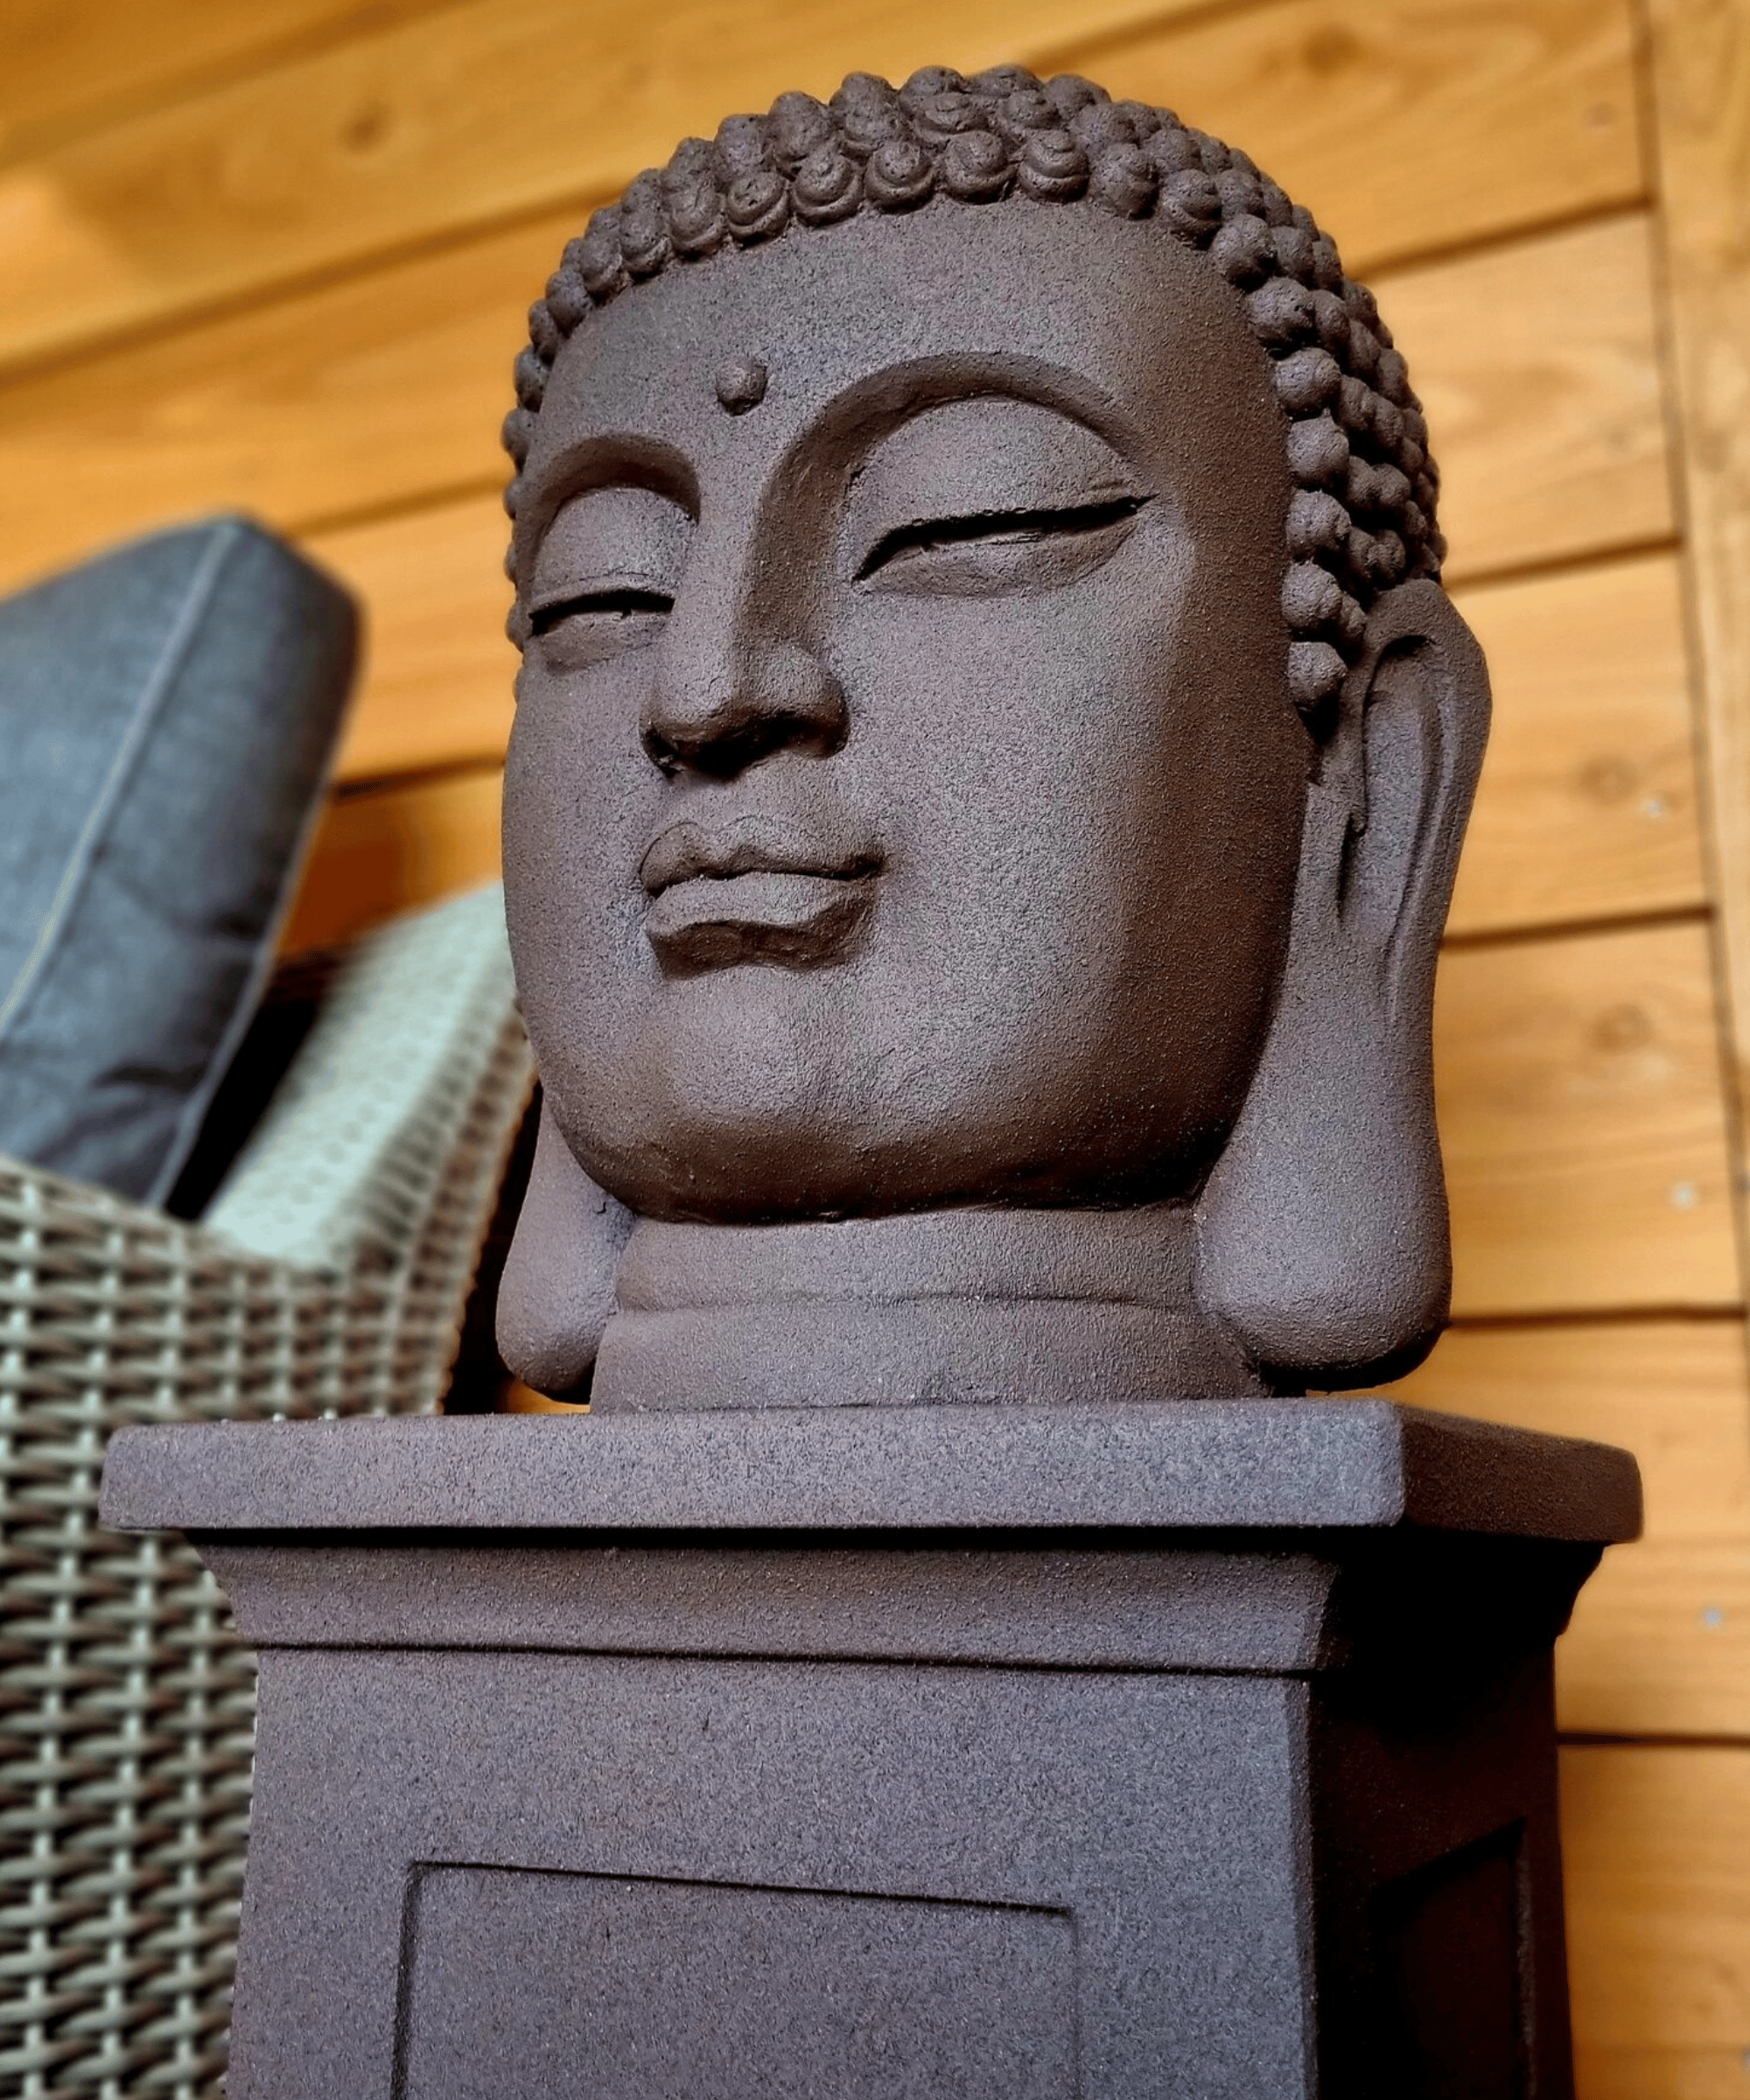 roestkleurig 42cm groot - Boeddha-beelden.com